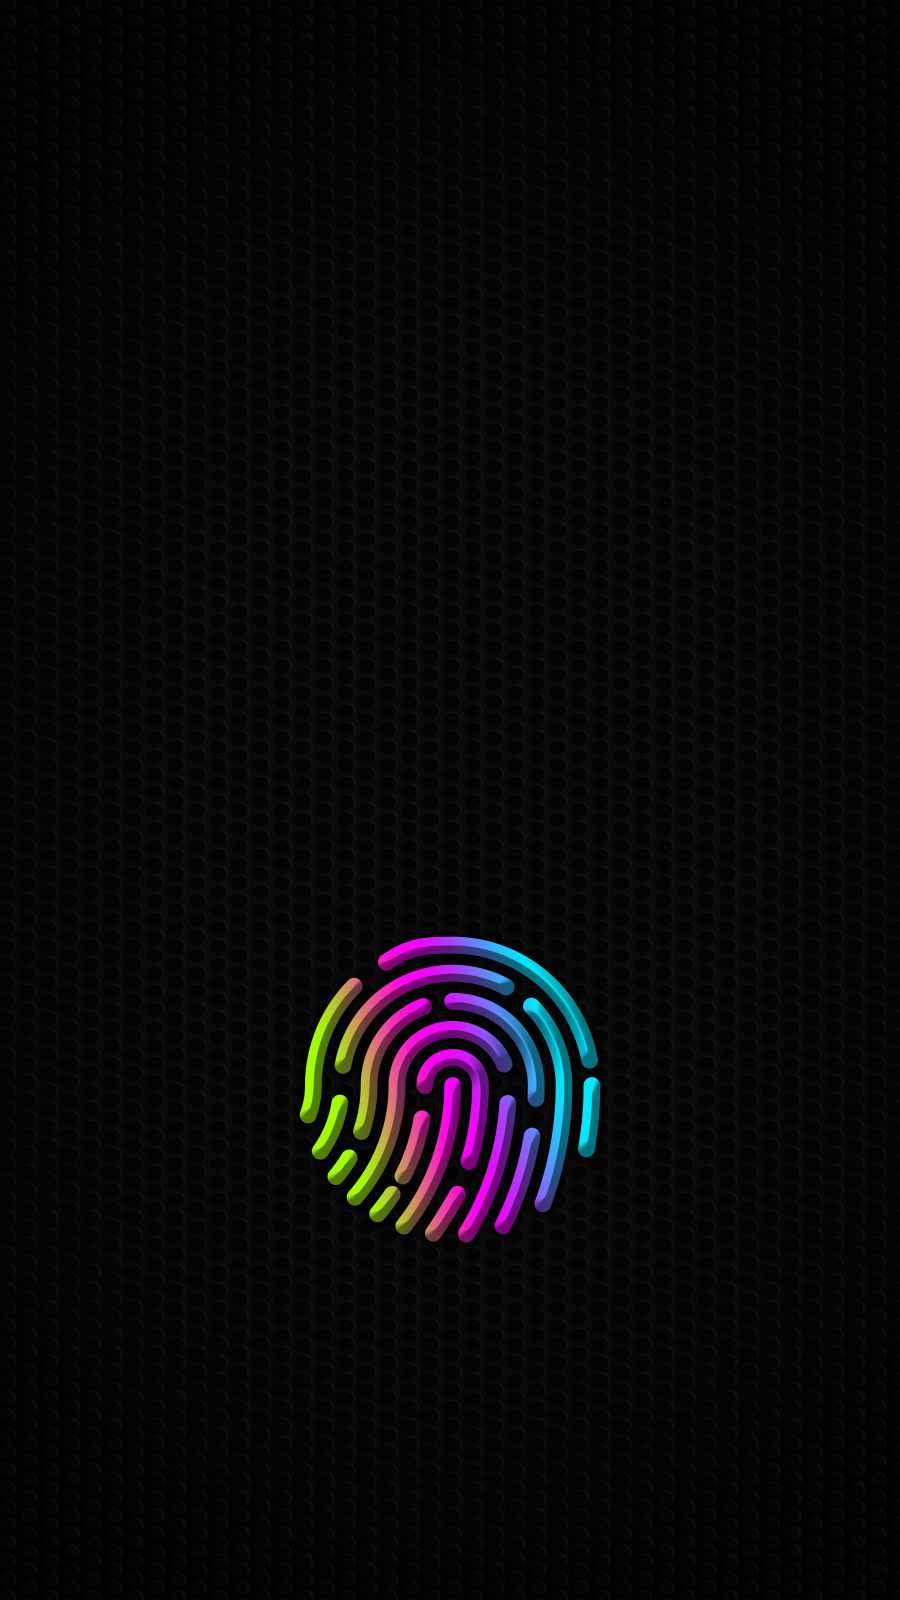 Fingerprint Lock 4K IPhone Wallpaper - IPhone Wallpapers : iPhone Wallpapers